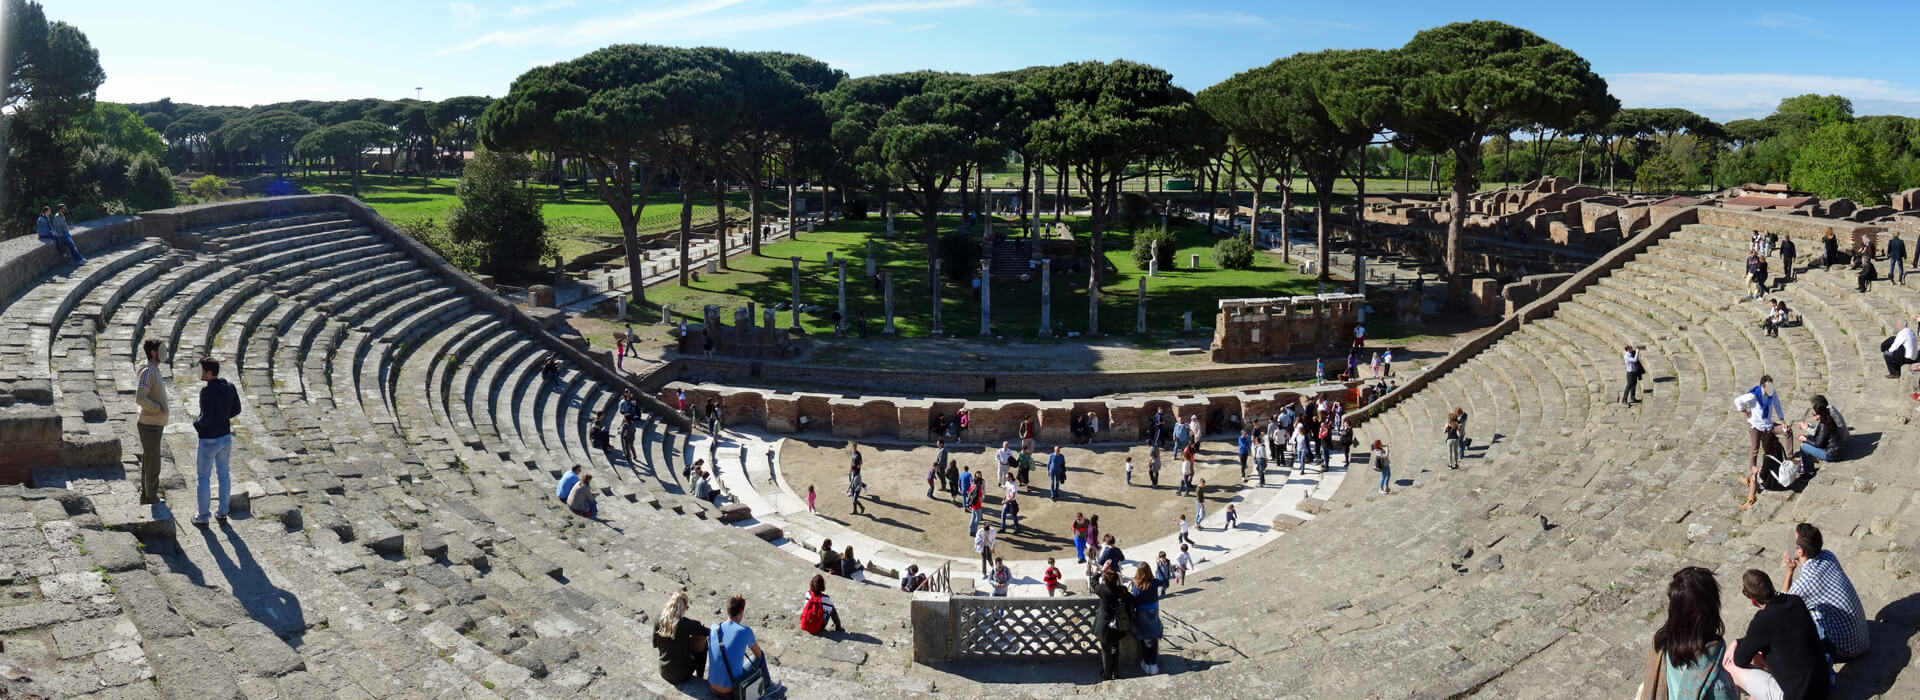 RomaGuideTour - Visite guidate a Roma - Ostia Antica